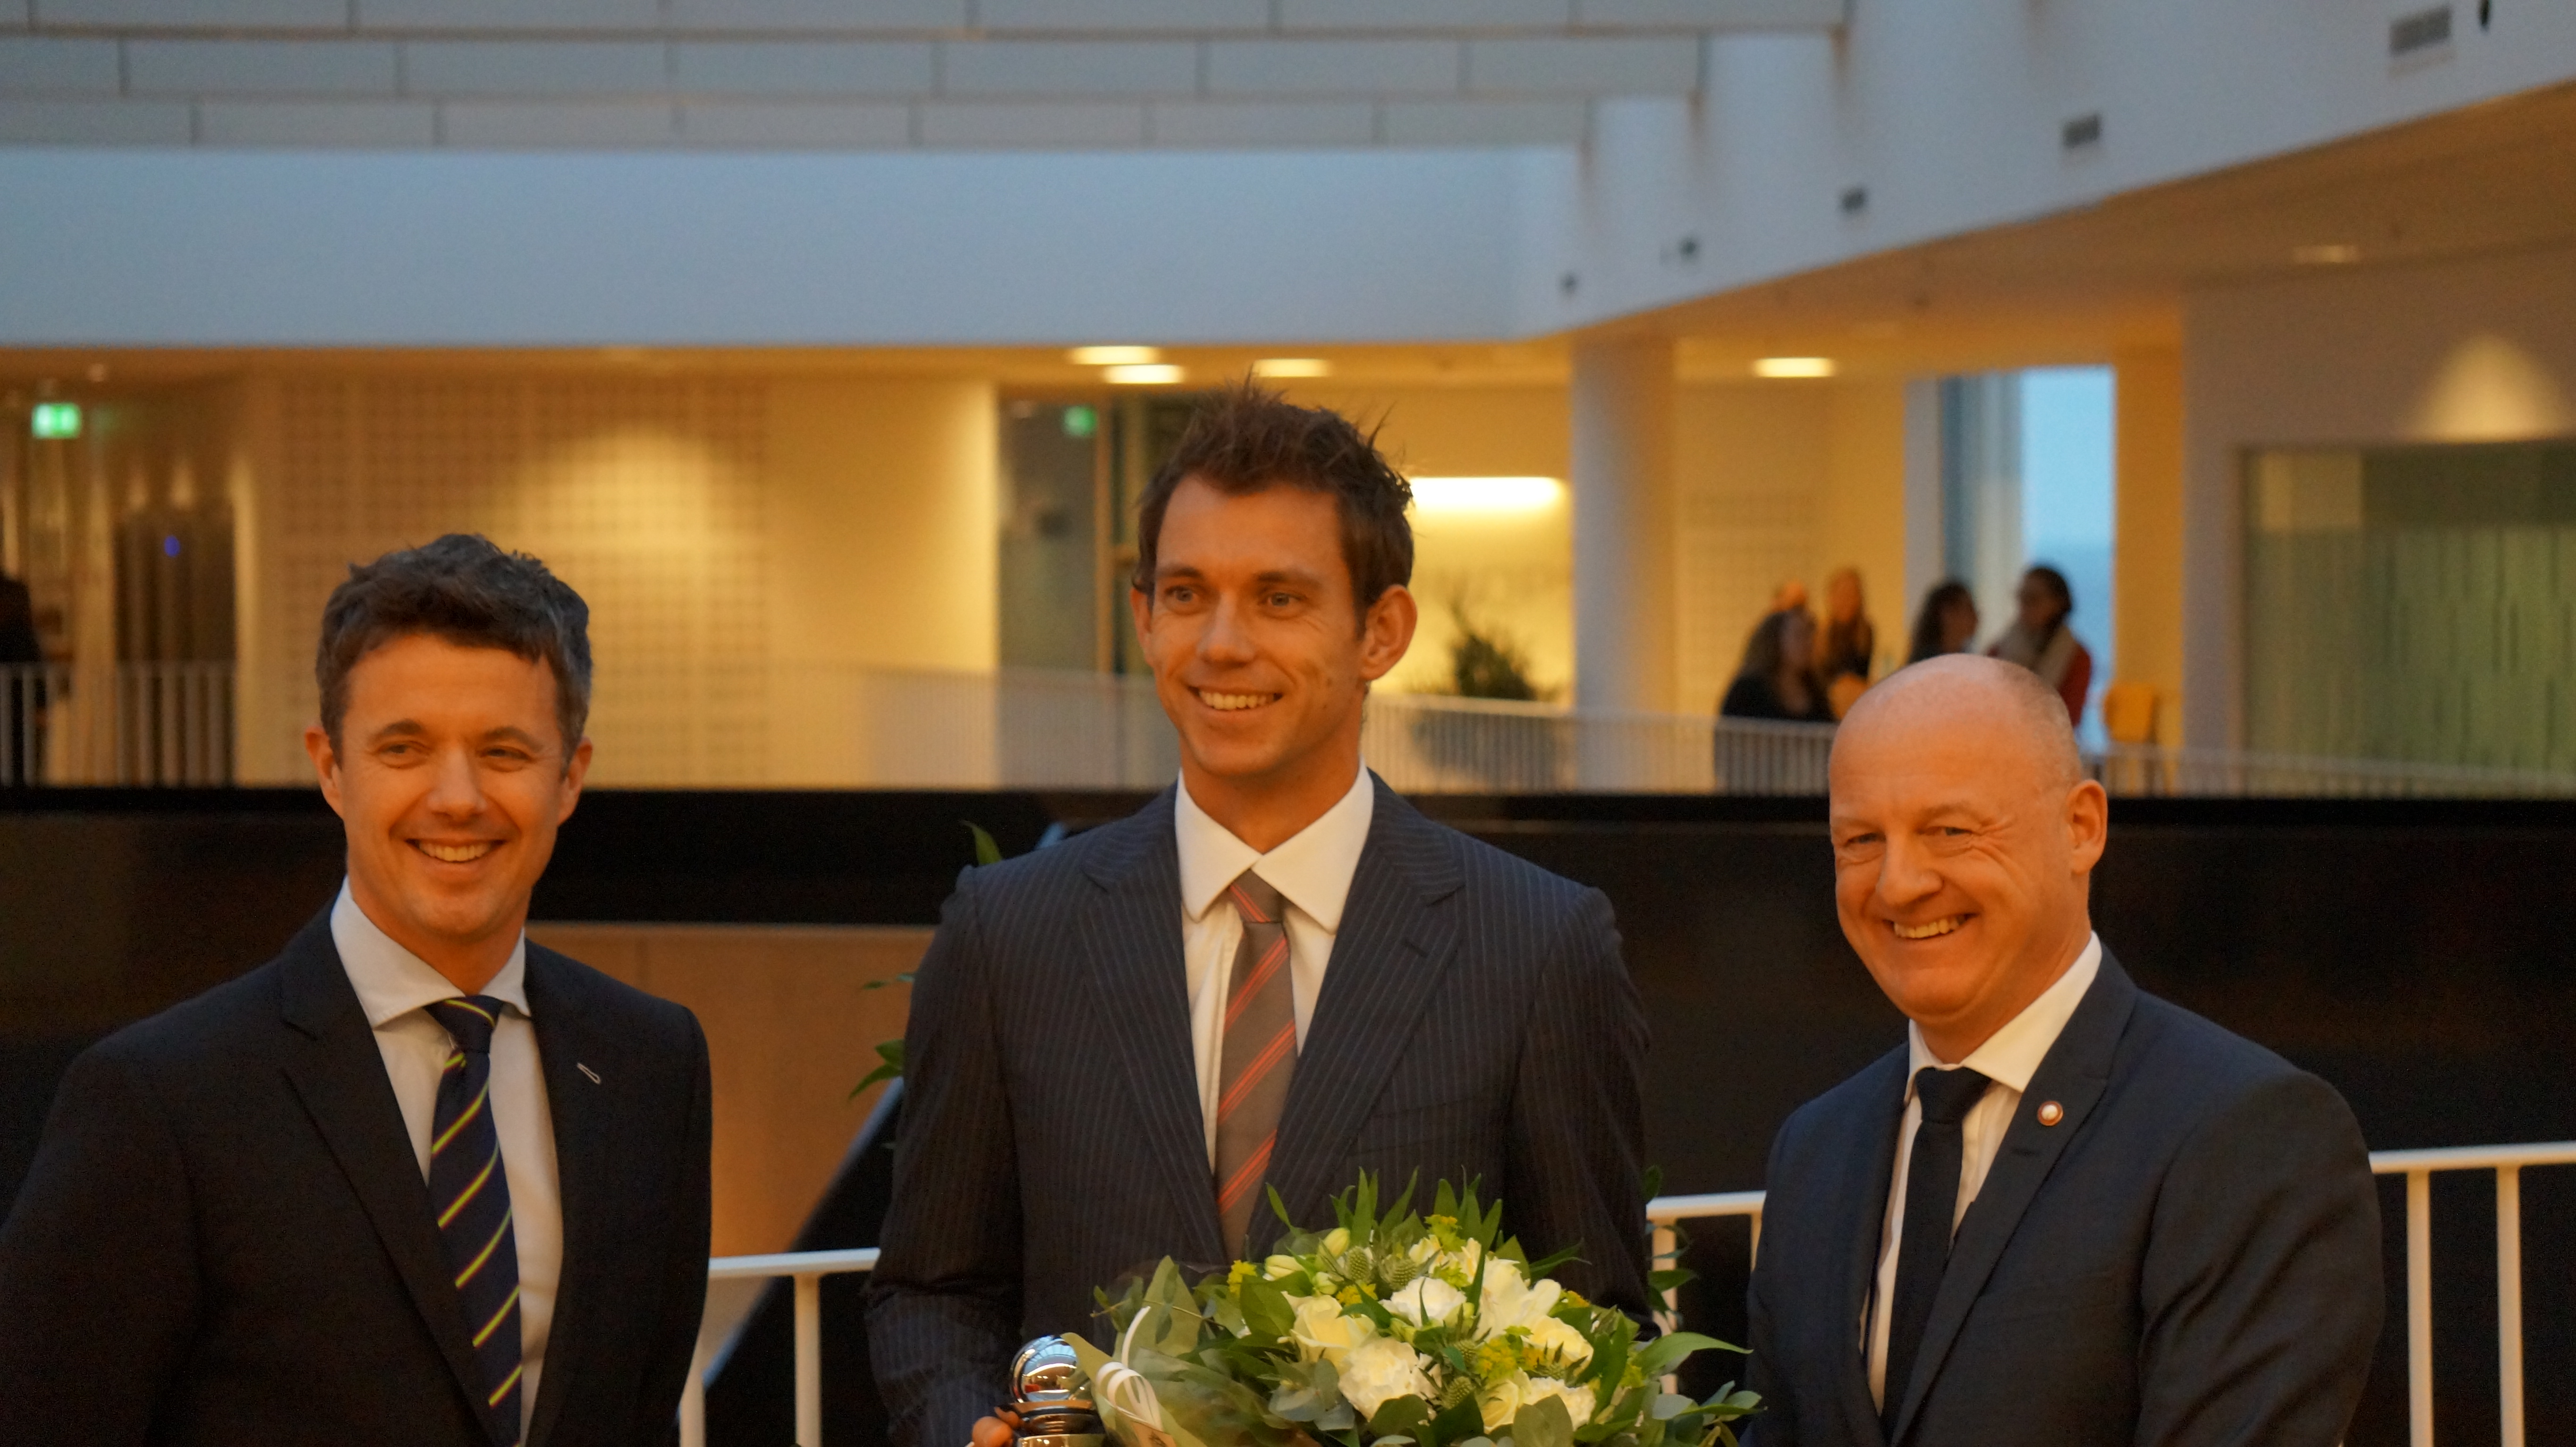 Frederik Løchte Nielsen modtog ITF’s Commitment award 17. november i FN Byen i København.